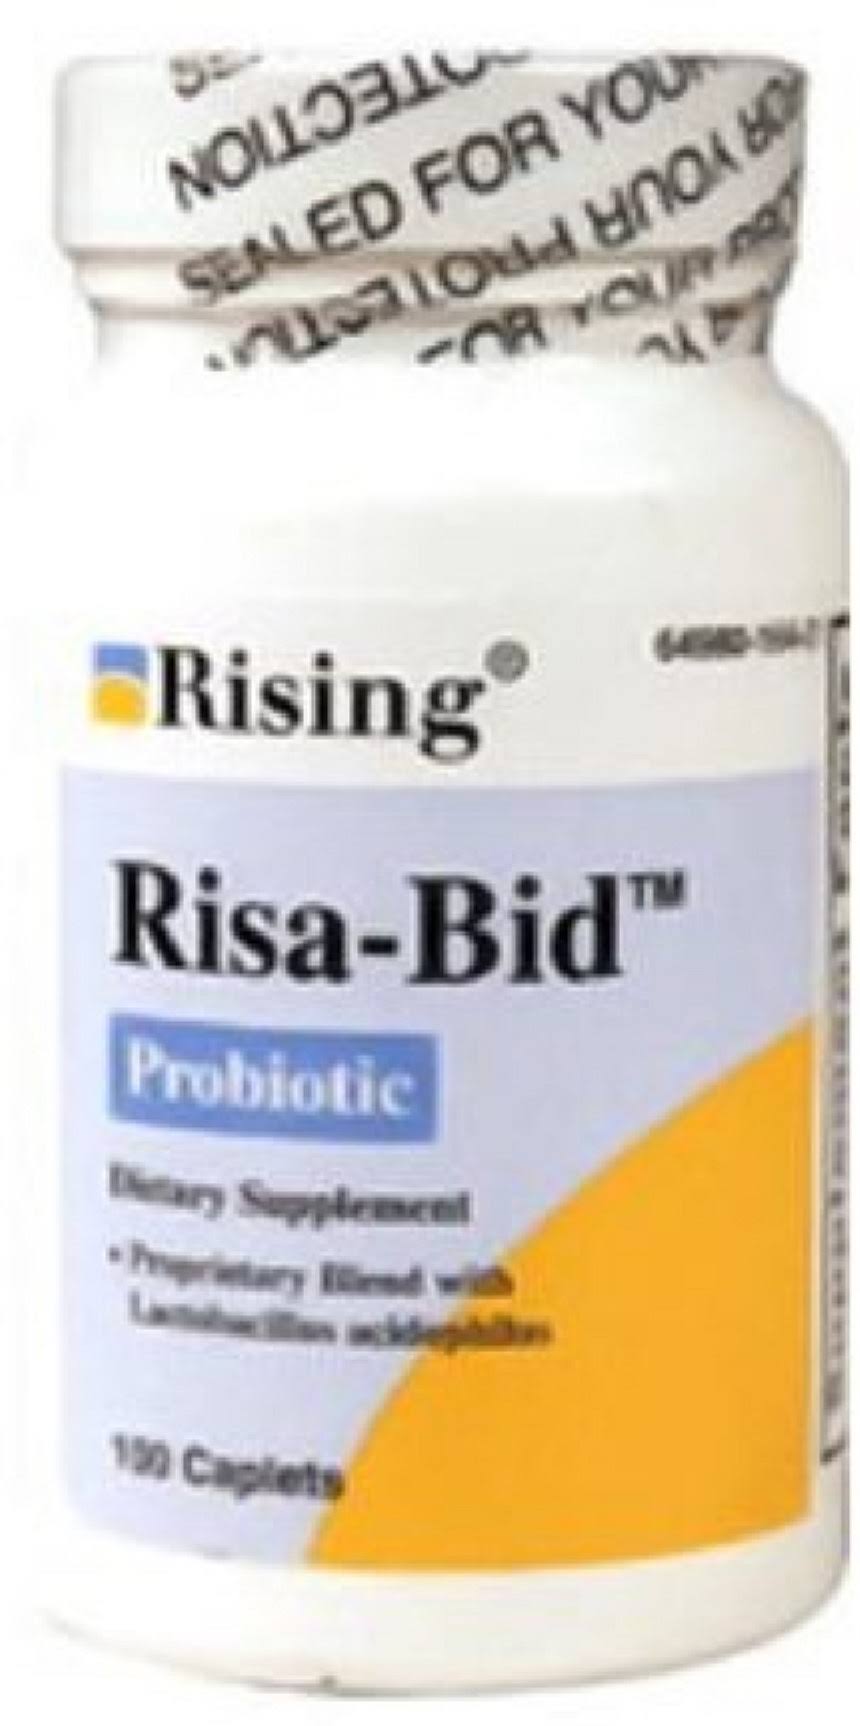 Rising Risa-bid Probiotic Dietary Supplement - 100 Caplets